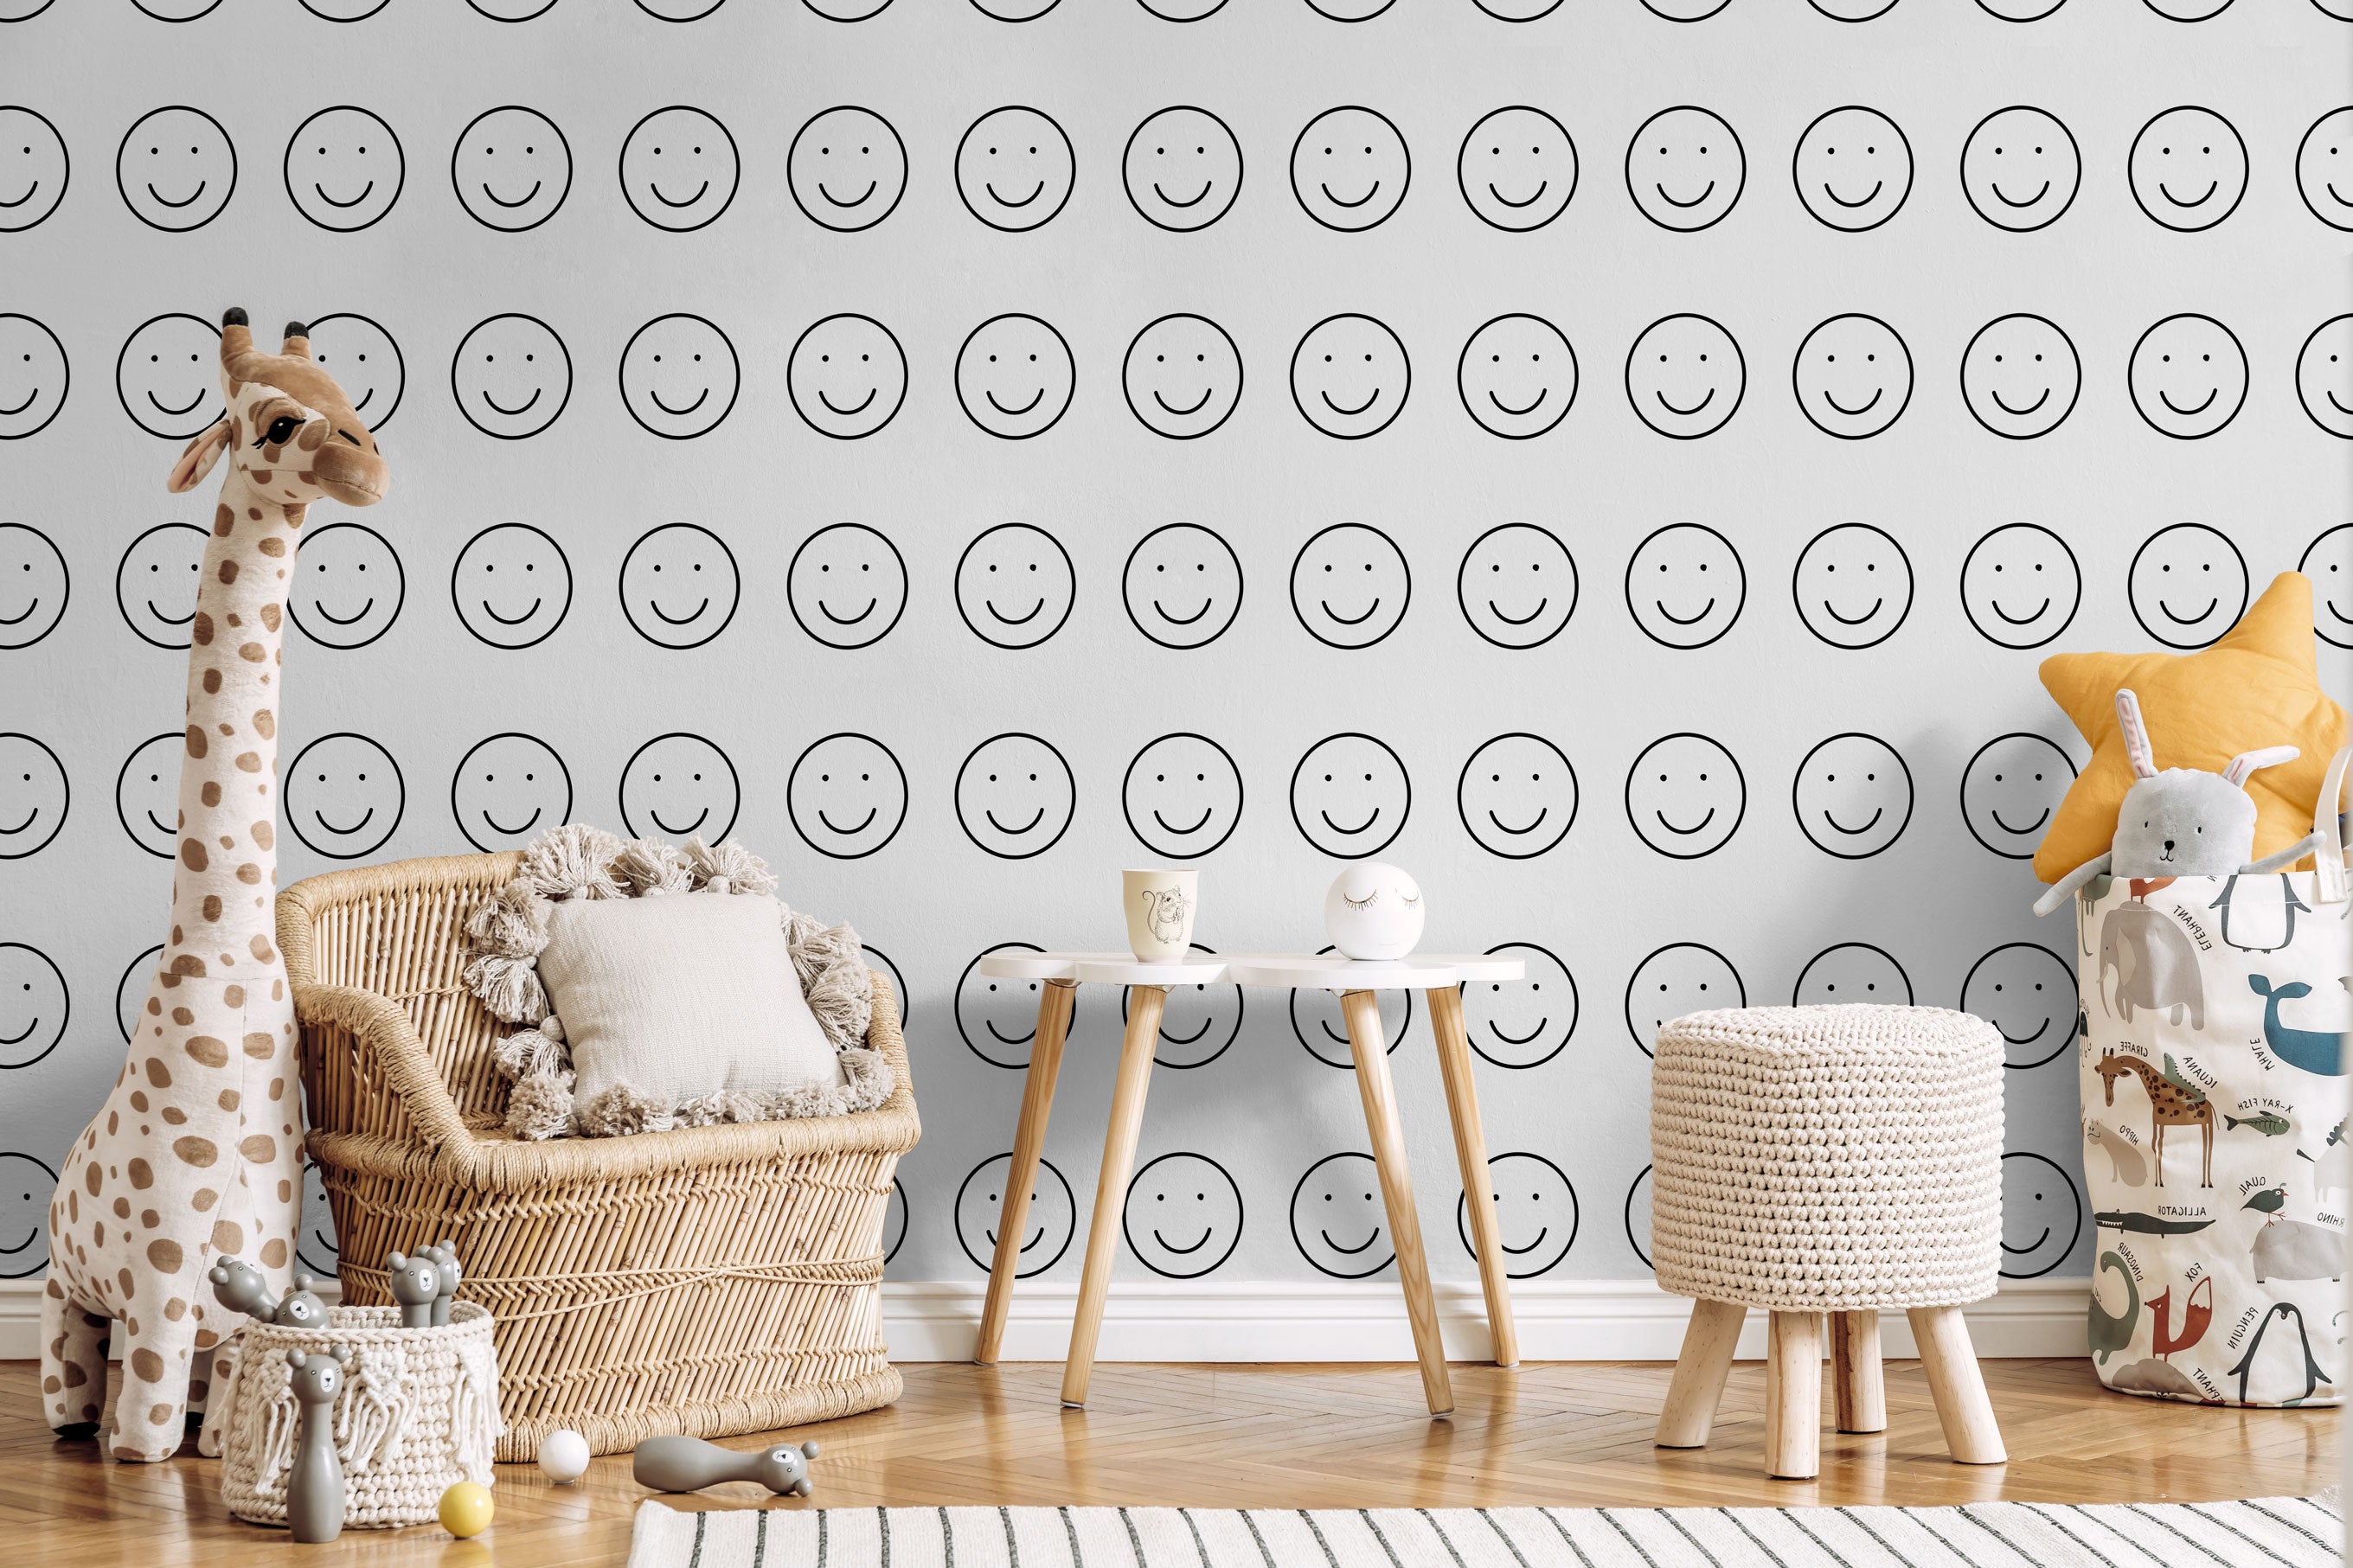 Be Happy Wallpaper Wallpaper - Wall Blush SG02 from WALL BLUSH